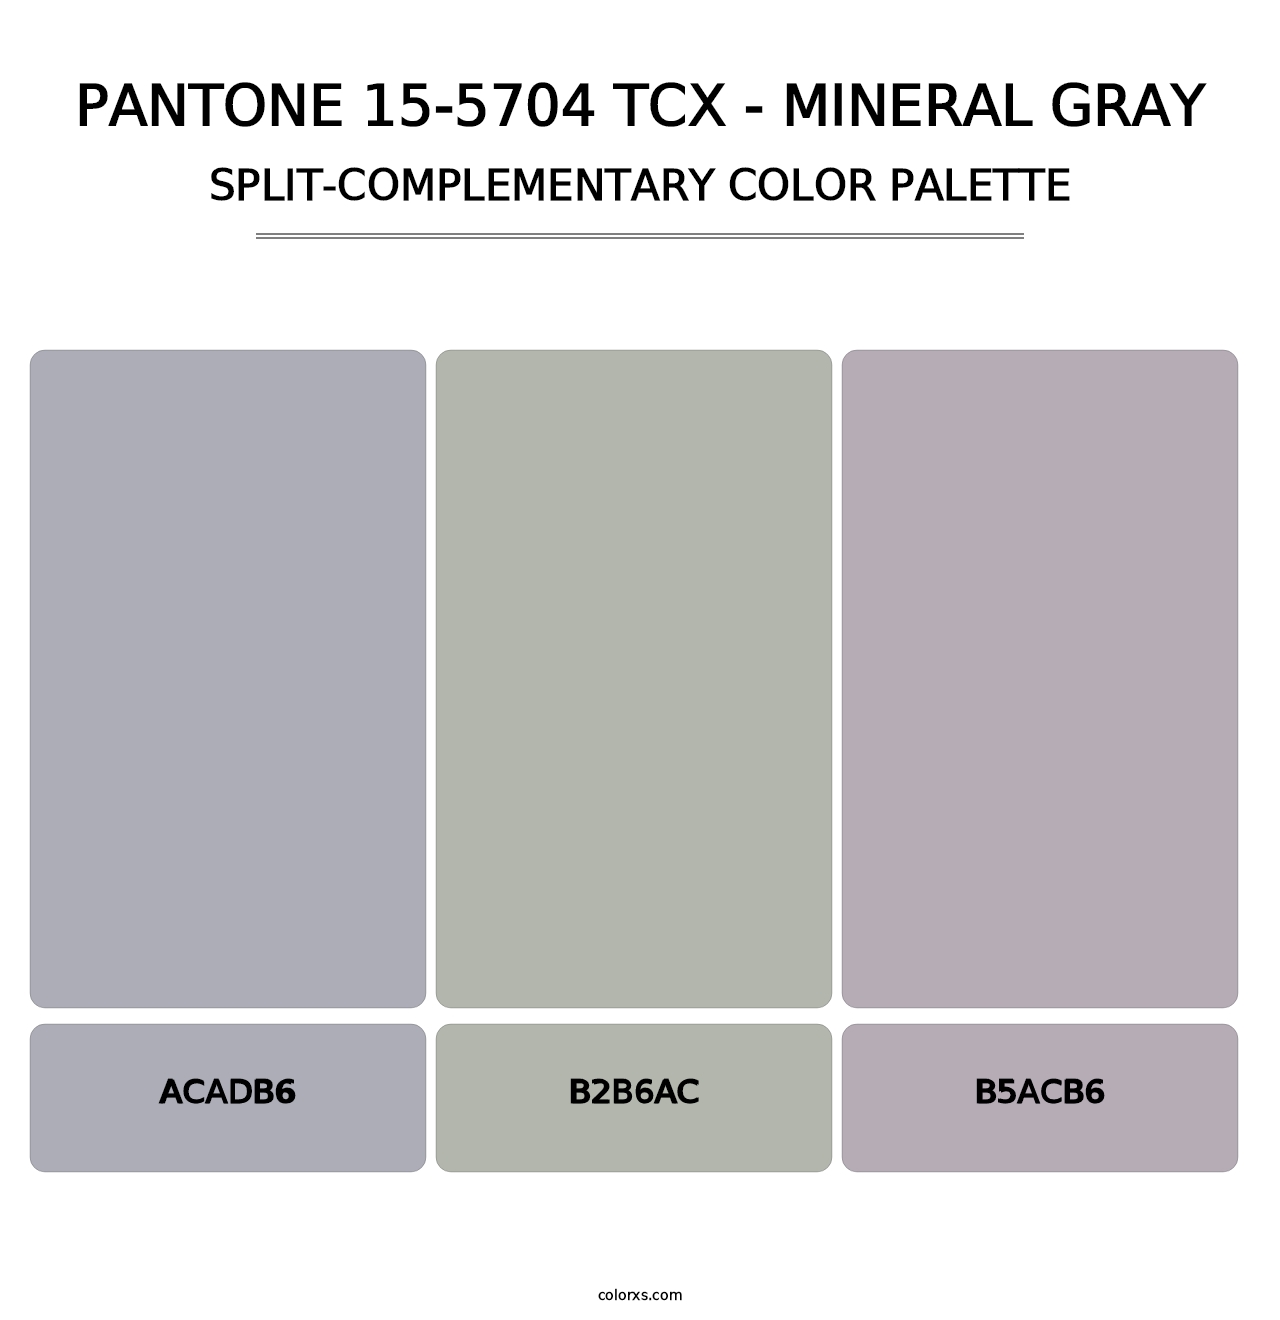 PANTONE 15-5704 TCX - Mineral Gray - Split-Complementary Color Palette